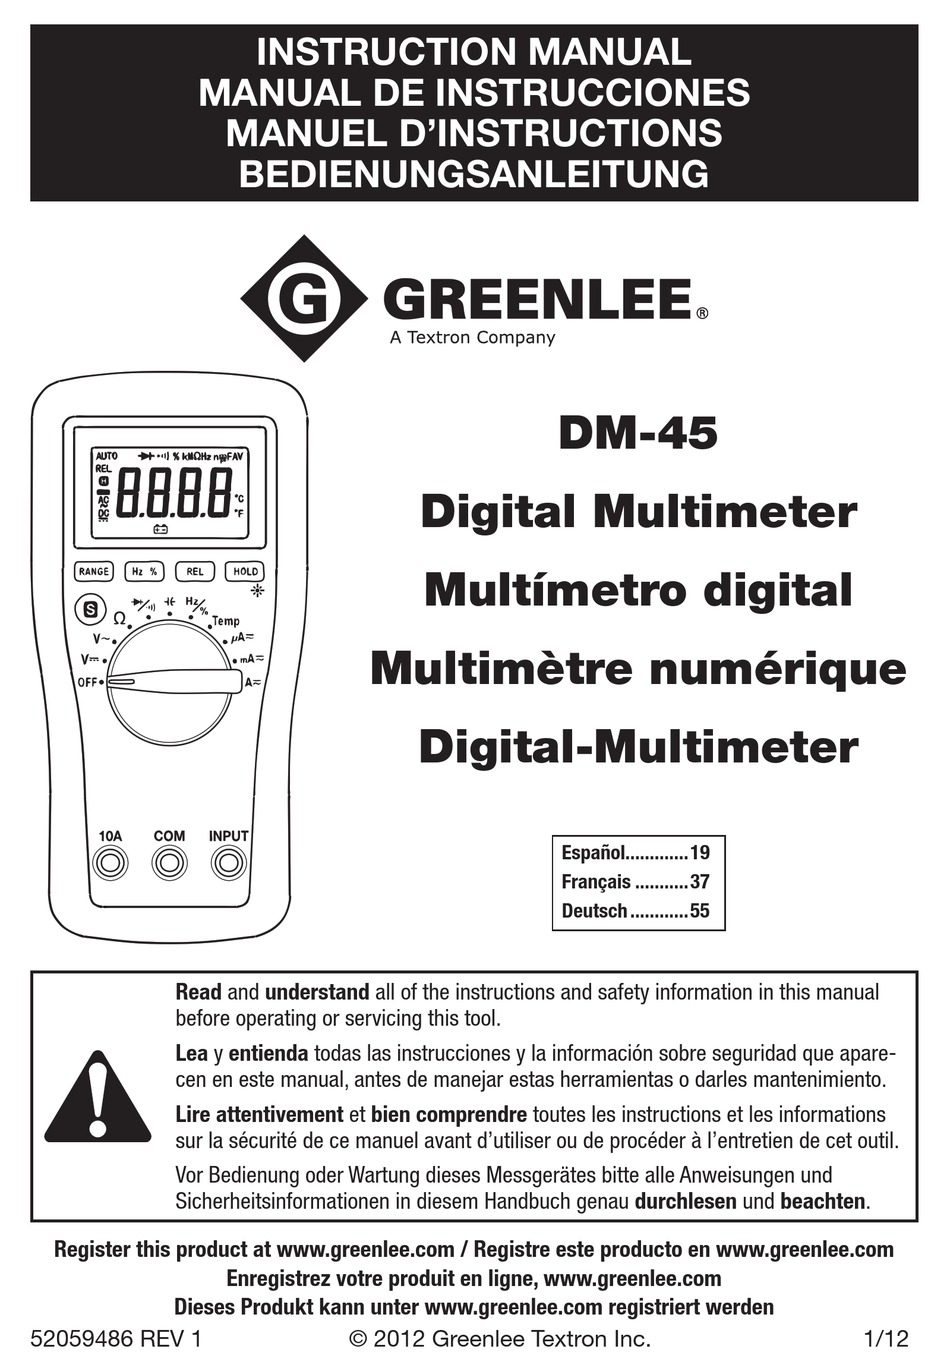 GREENLEE DM-45 INSTRUCTION MANUAL Pdf Download | ManualsLib